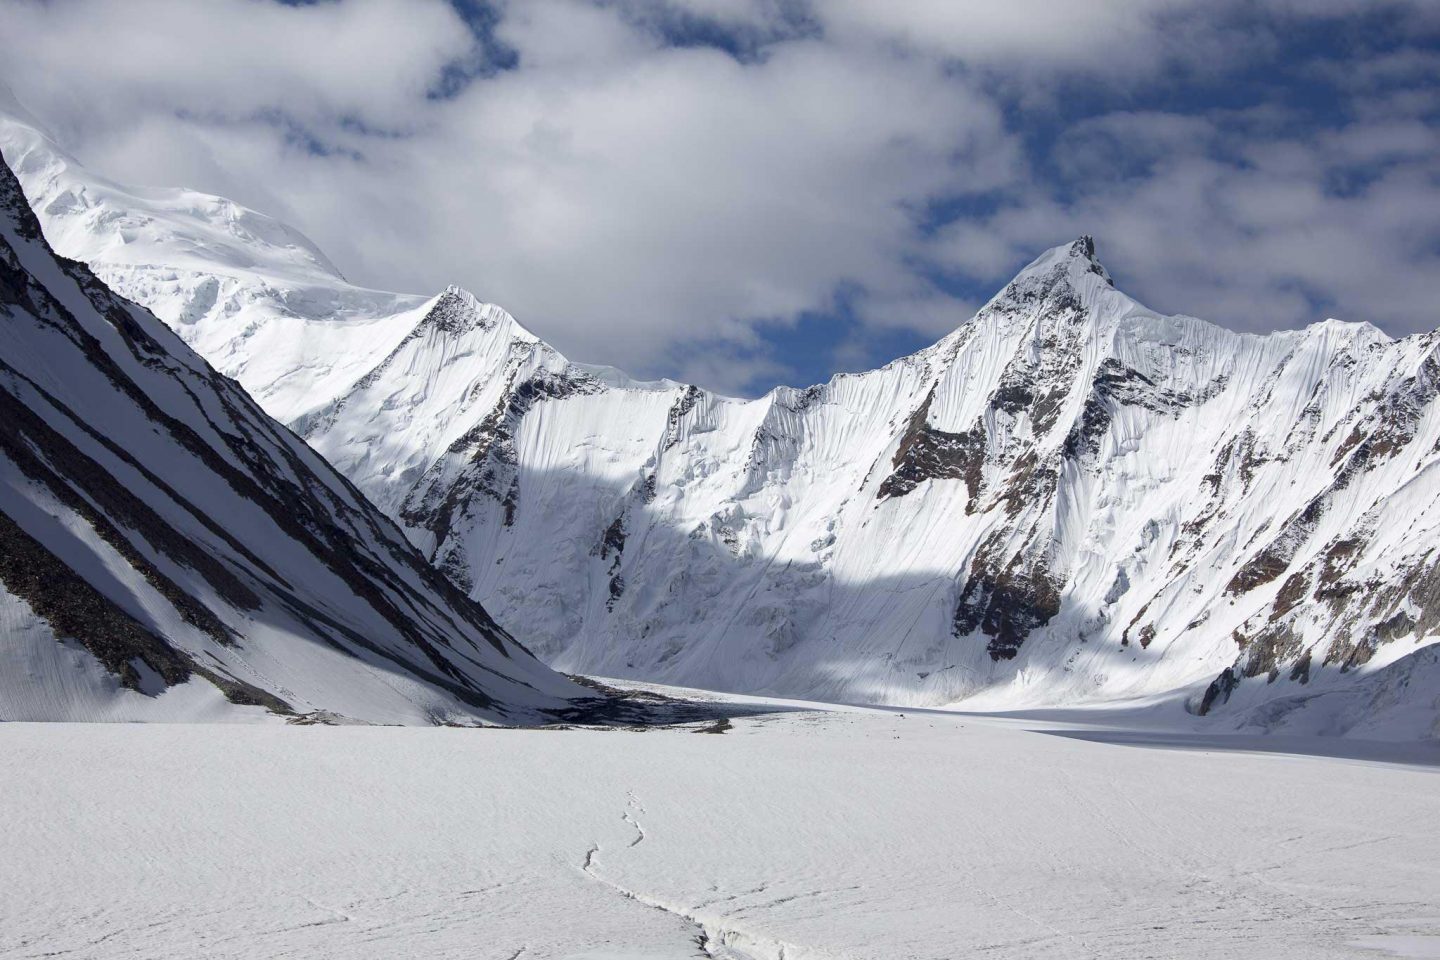 karakoram-biafo-glacier-banner-ski-expedition